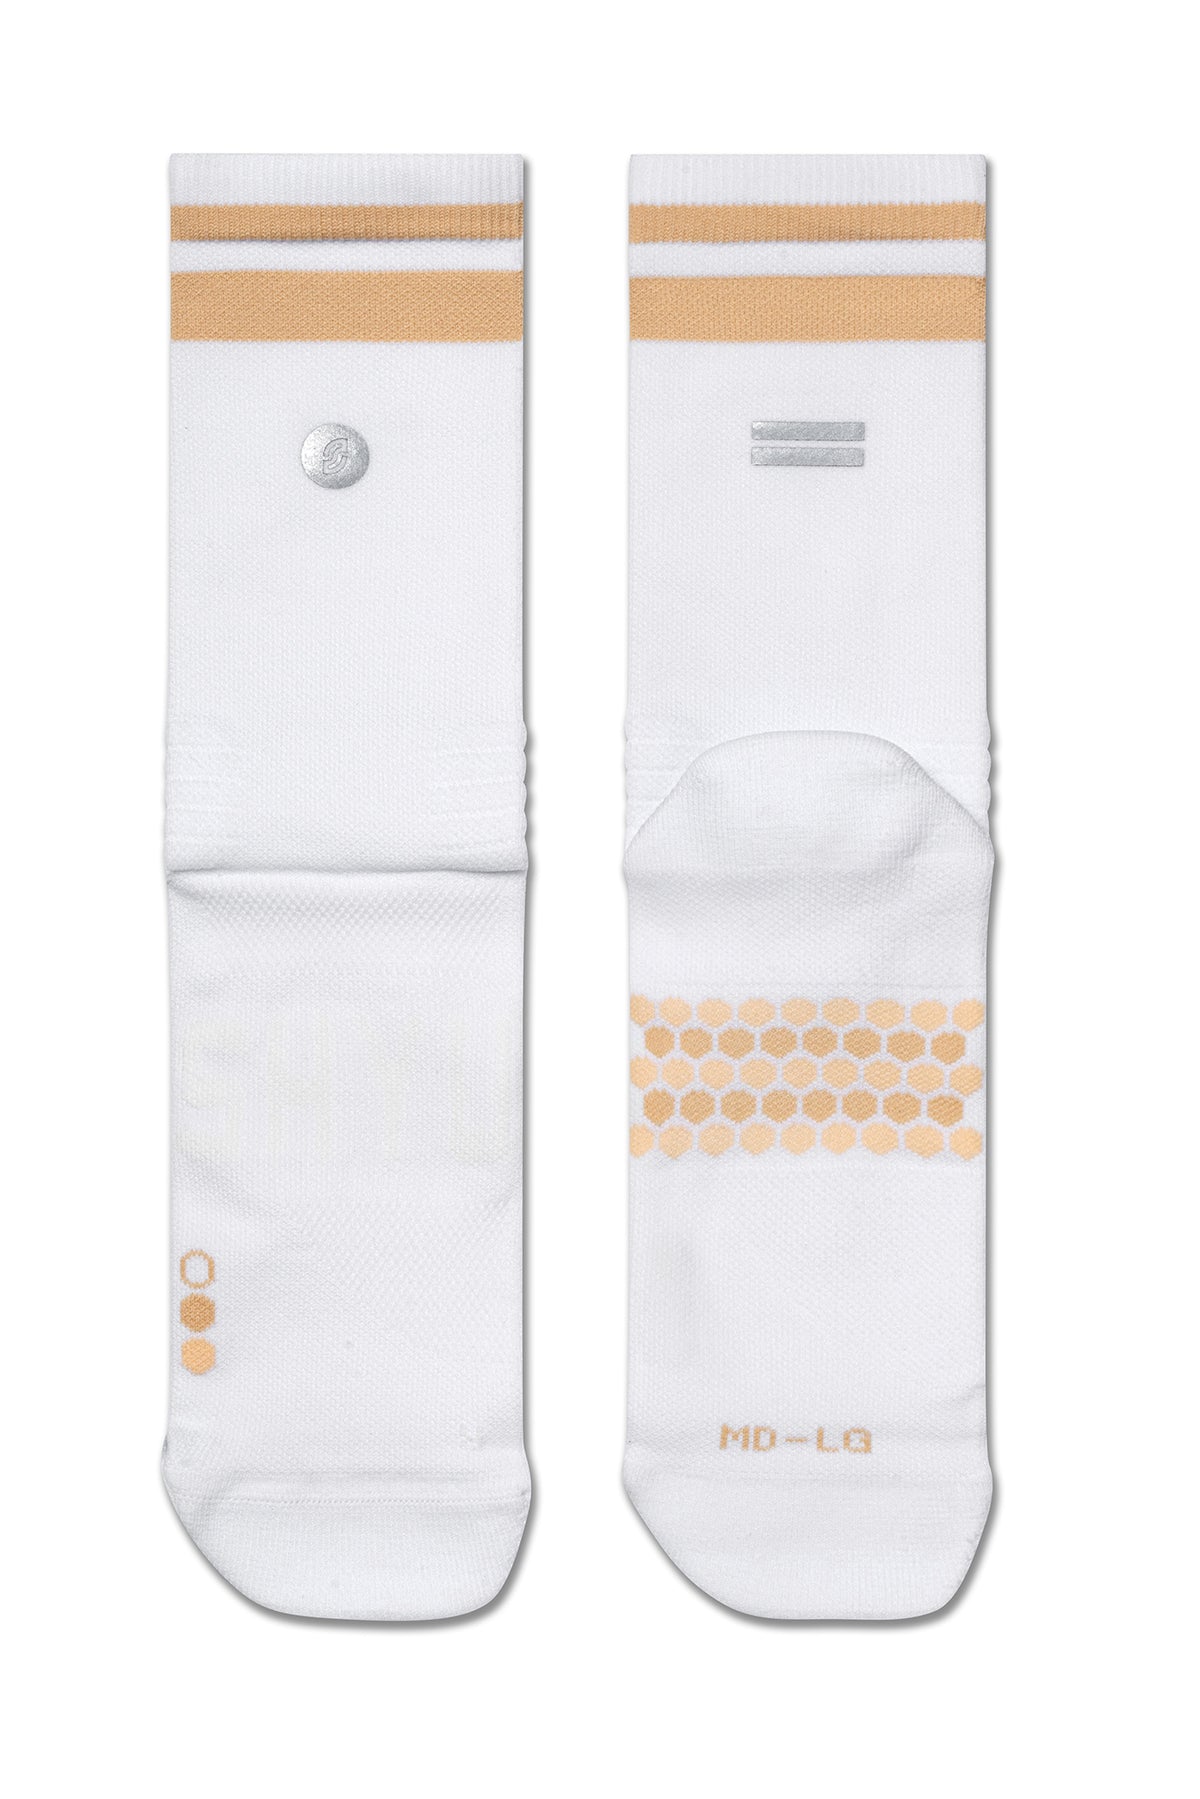 SHYU racing socks - white | oat | oat